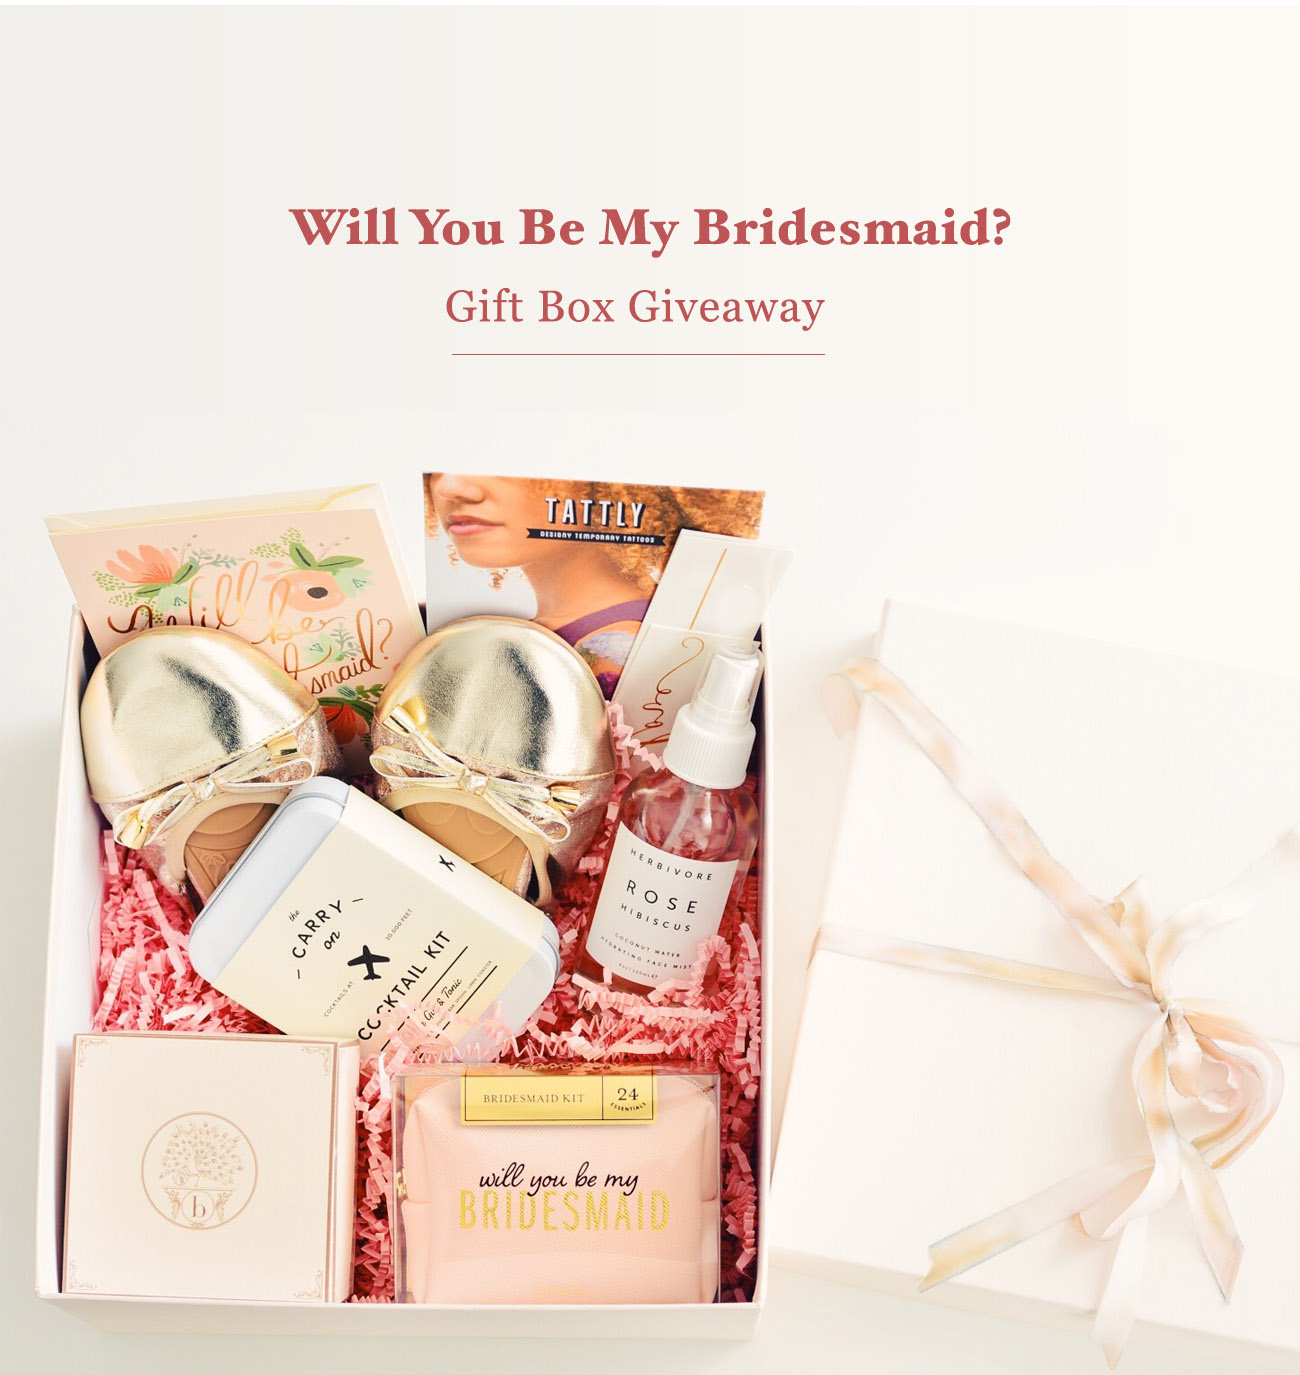 Bridesmaid Gift Box Giveaway from Bijou Candles